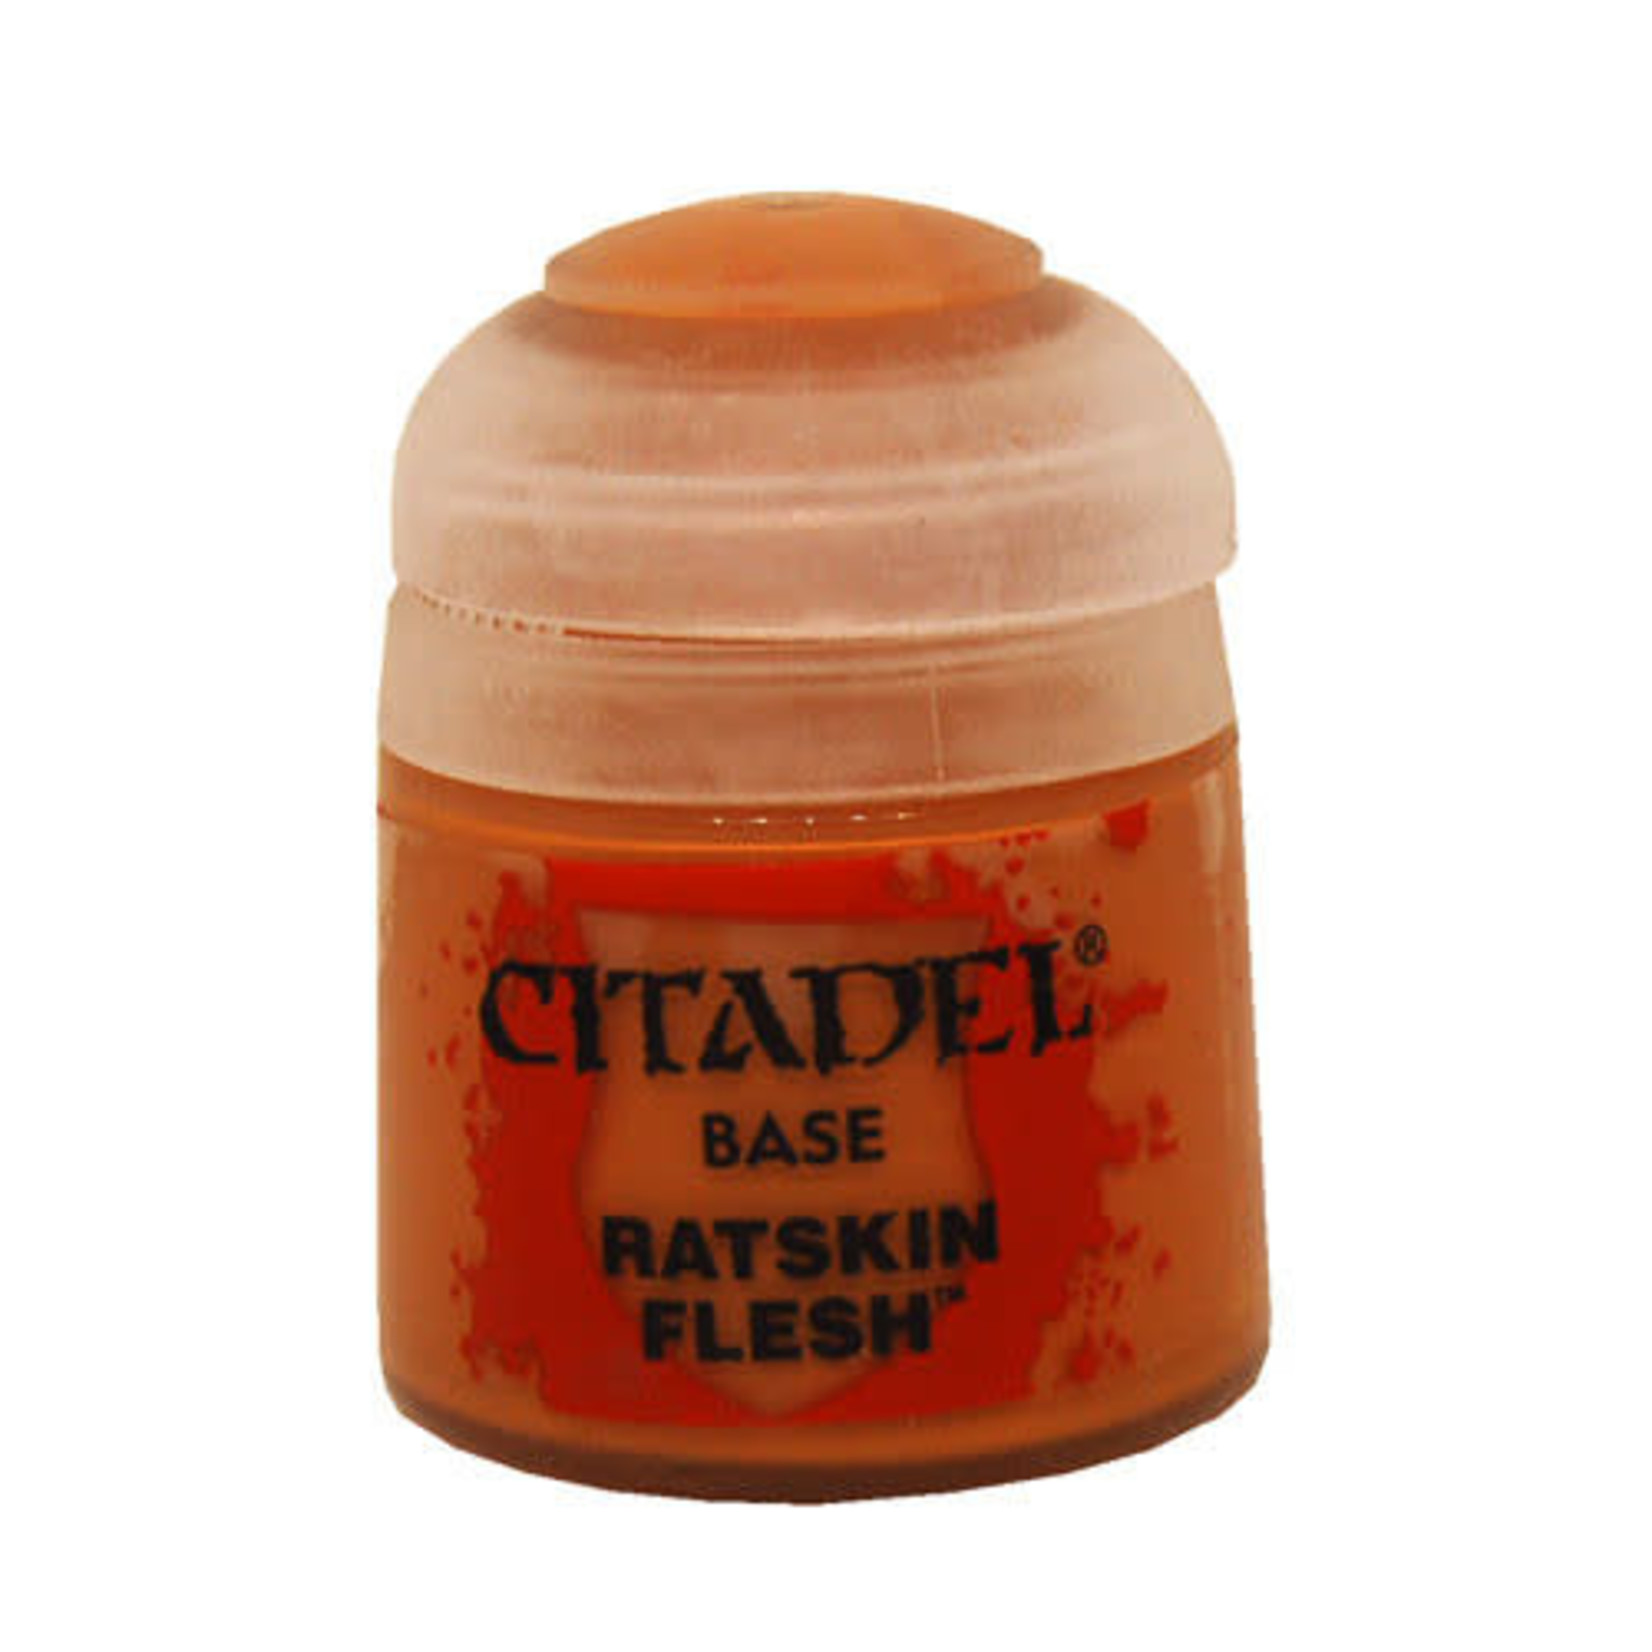 Citadel Citadel Paint - Base: Ratskin Flesh